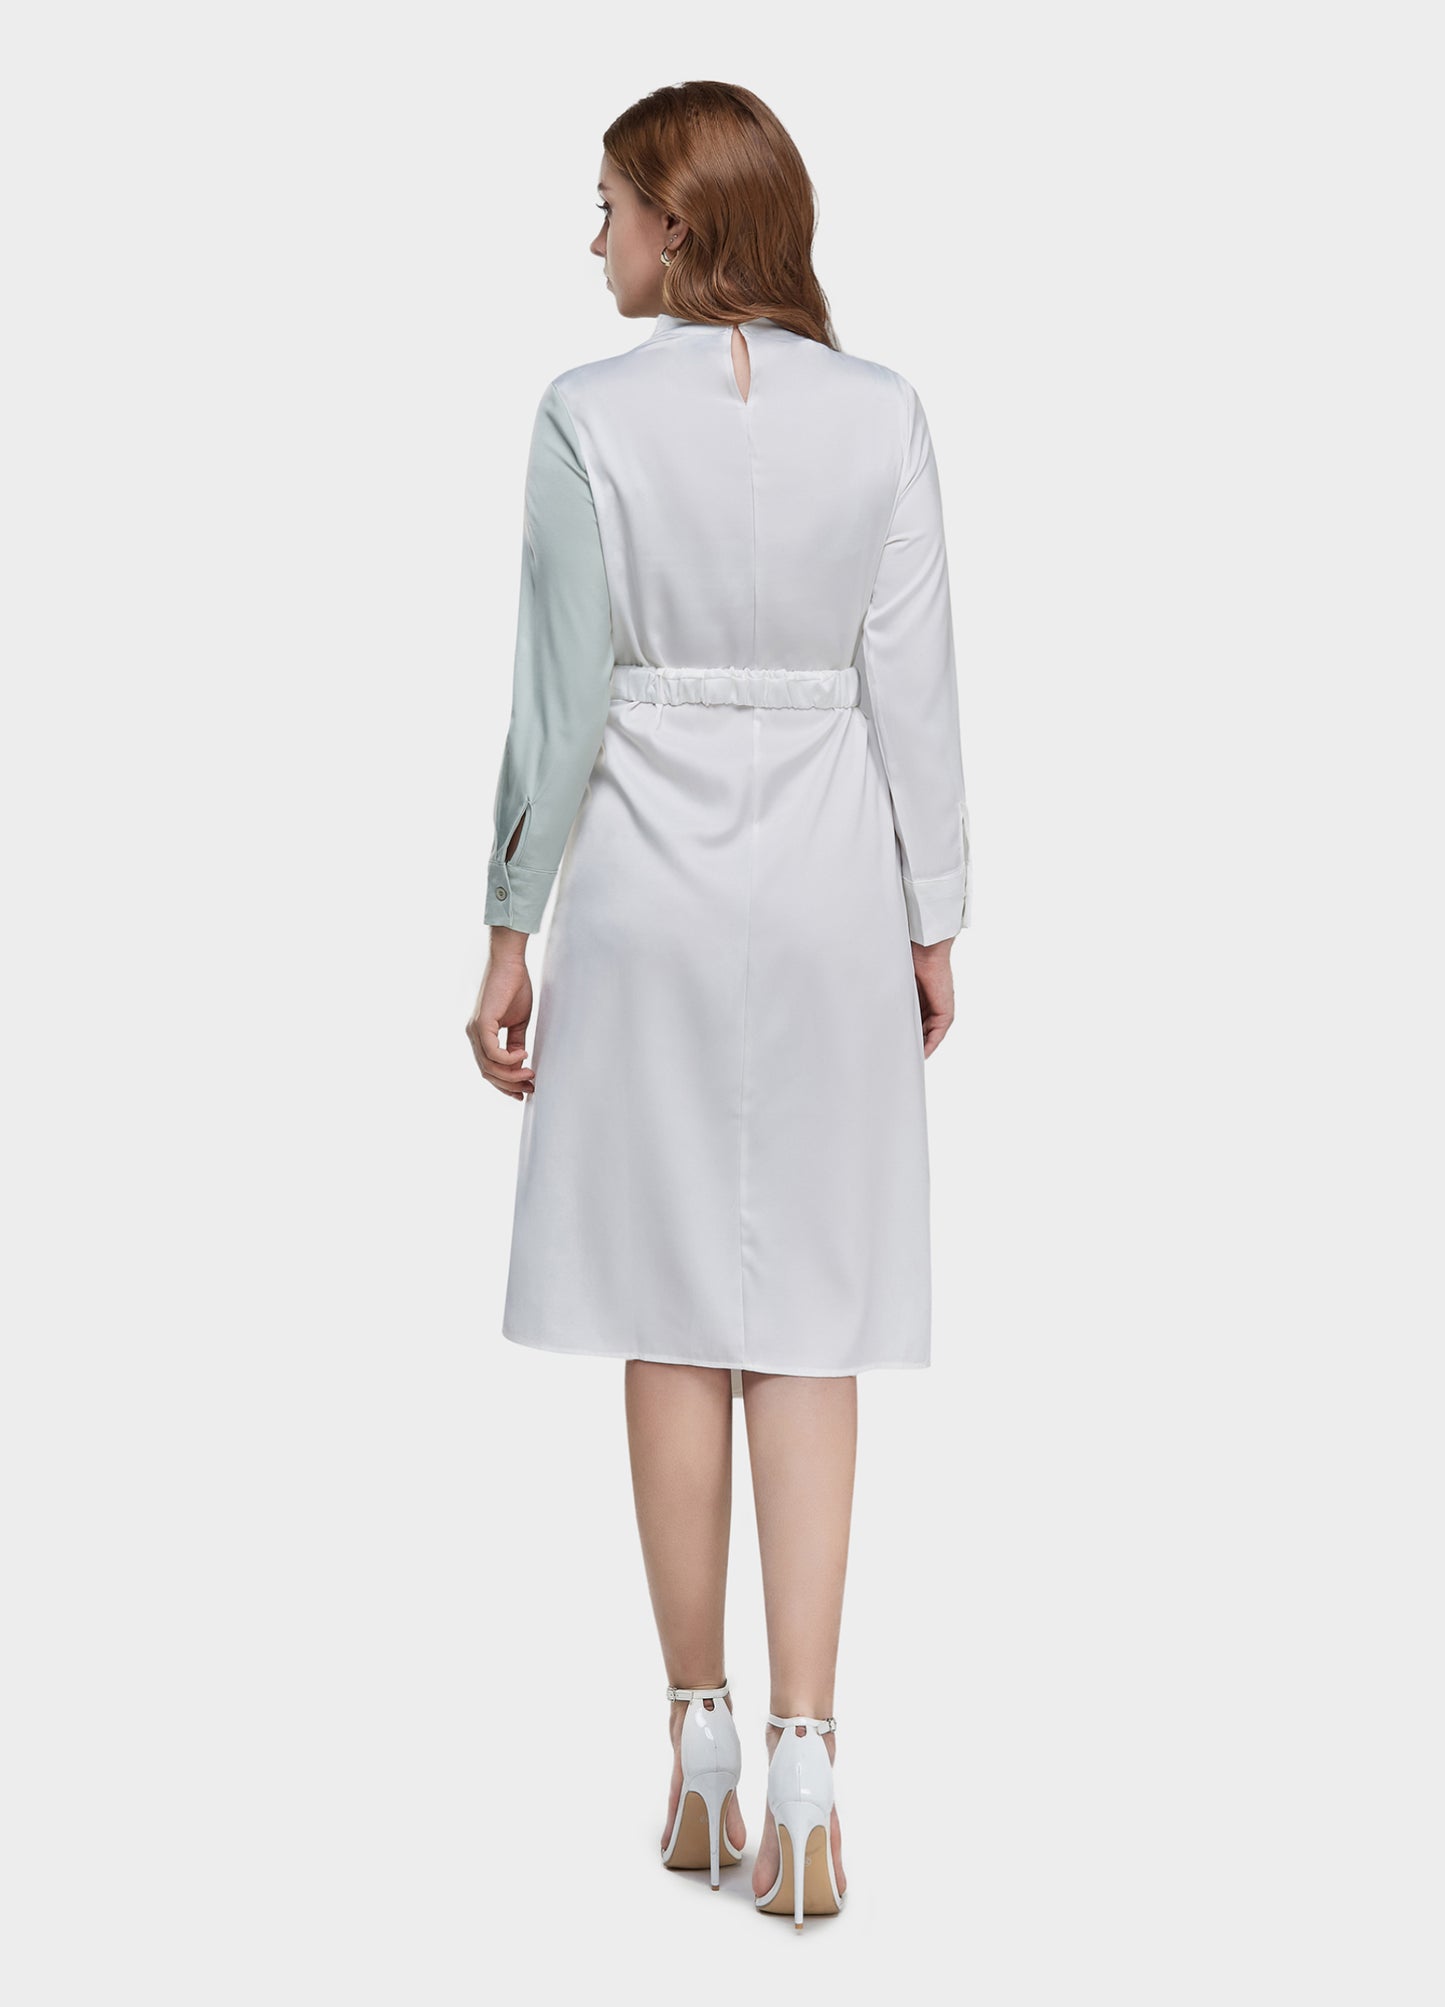 Women's Belted Colorblock High-Neck Long Sleeve Dress-Beige & Tiffany Blue back view